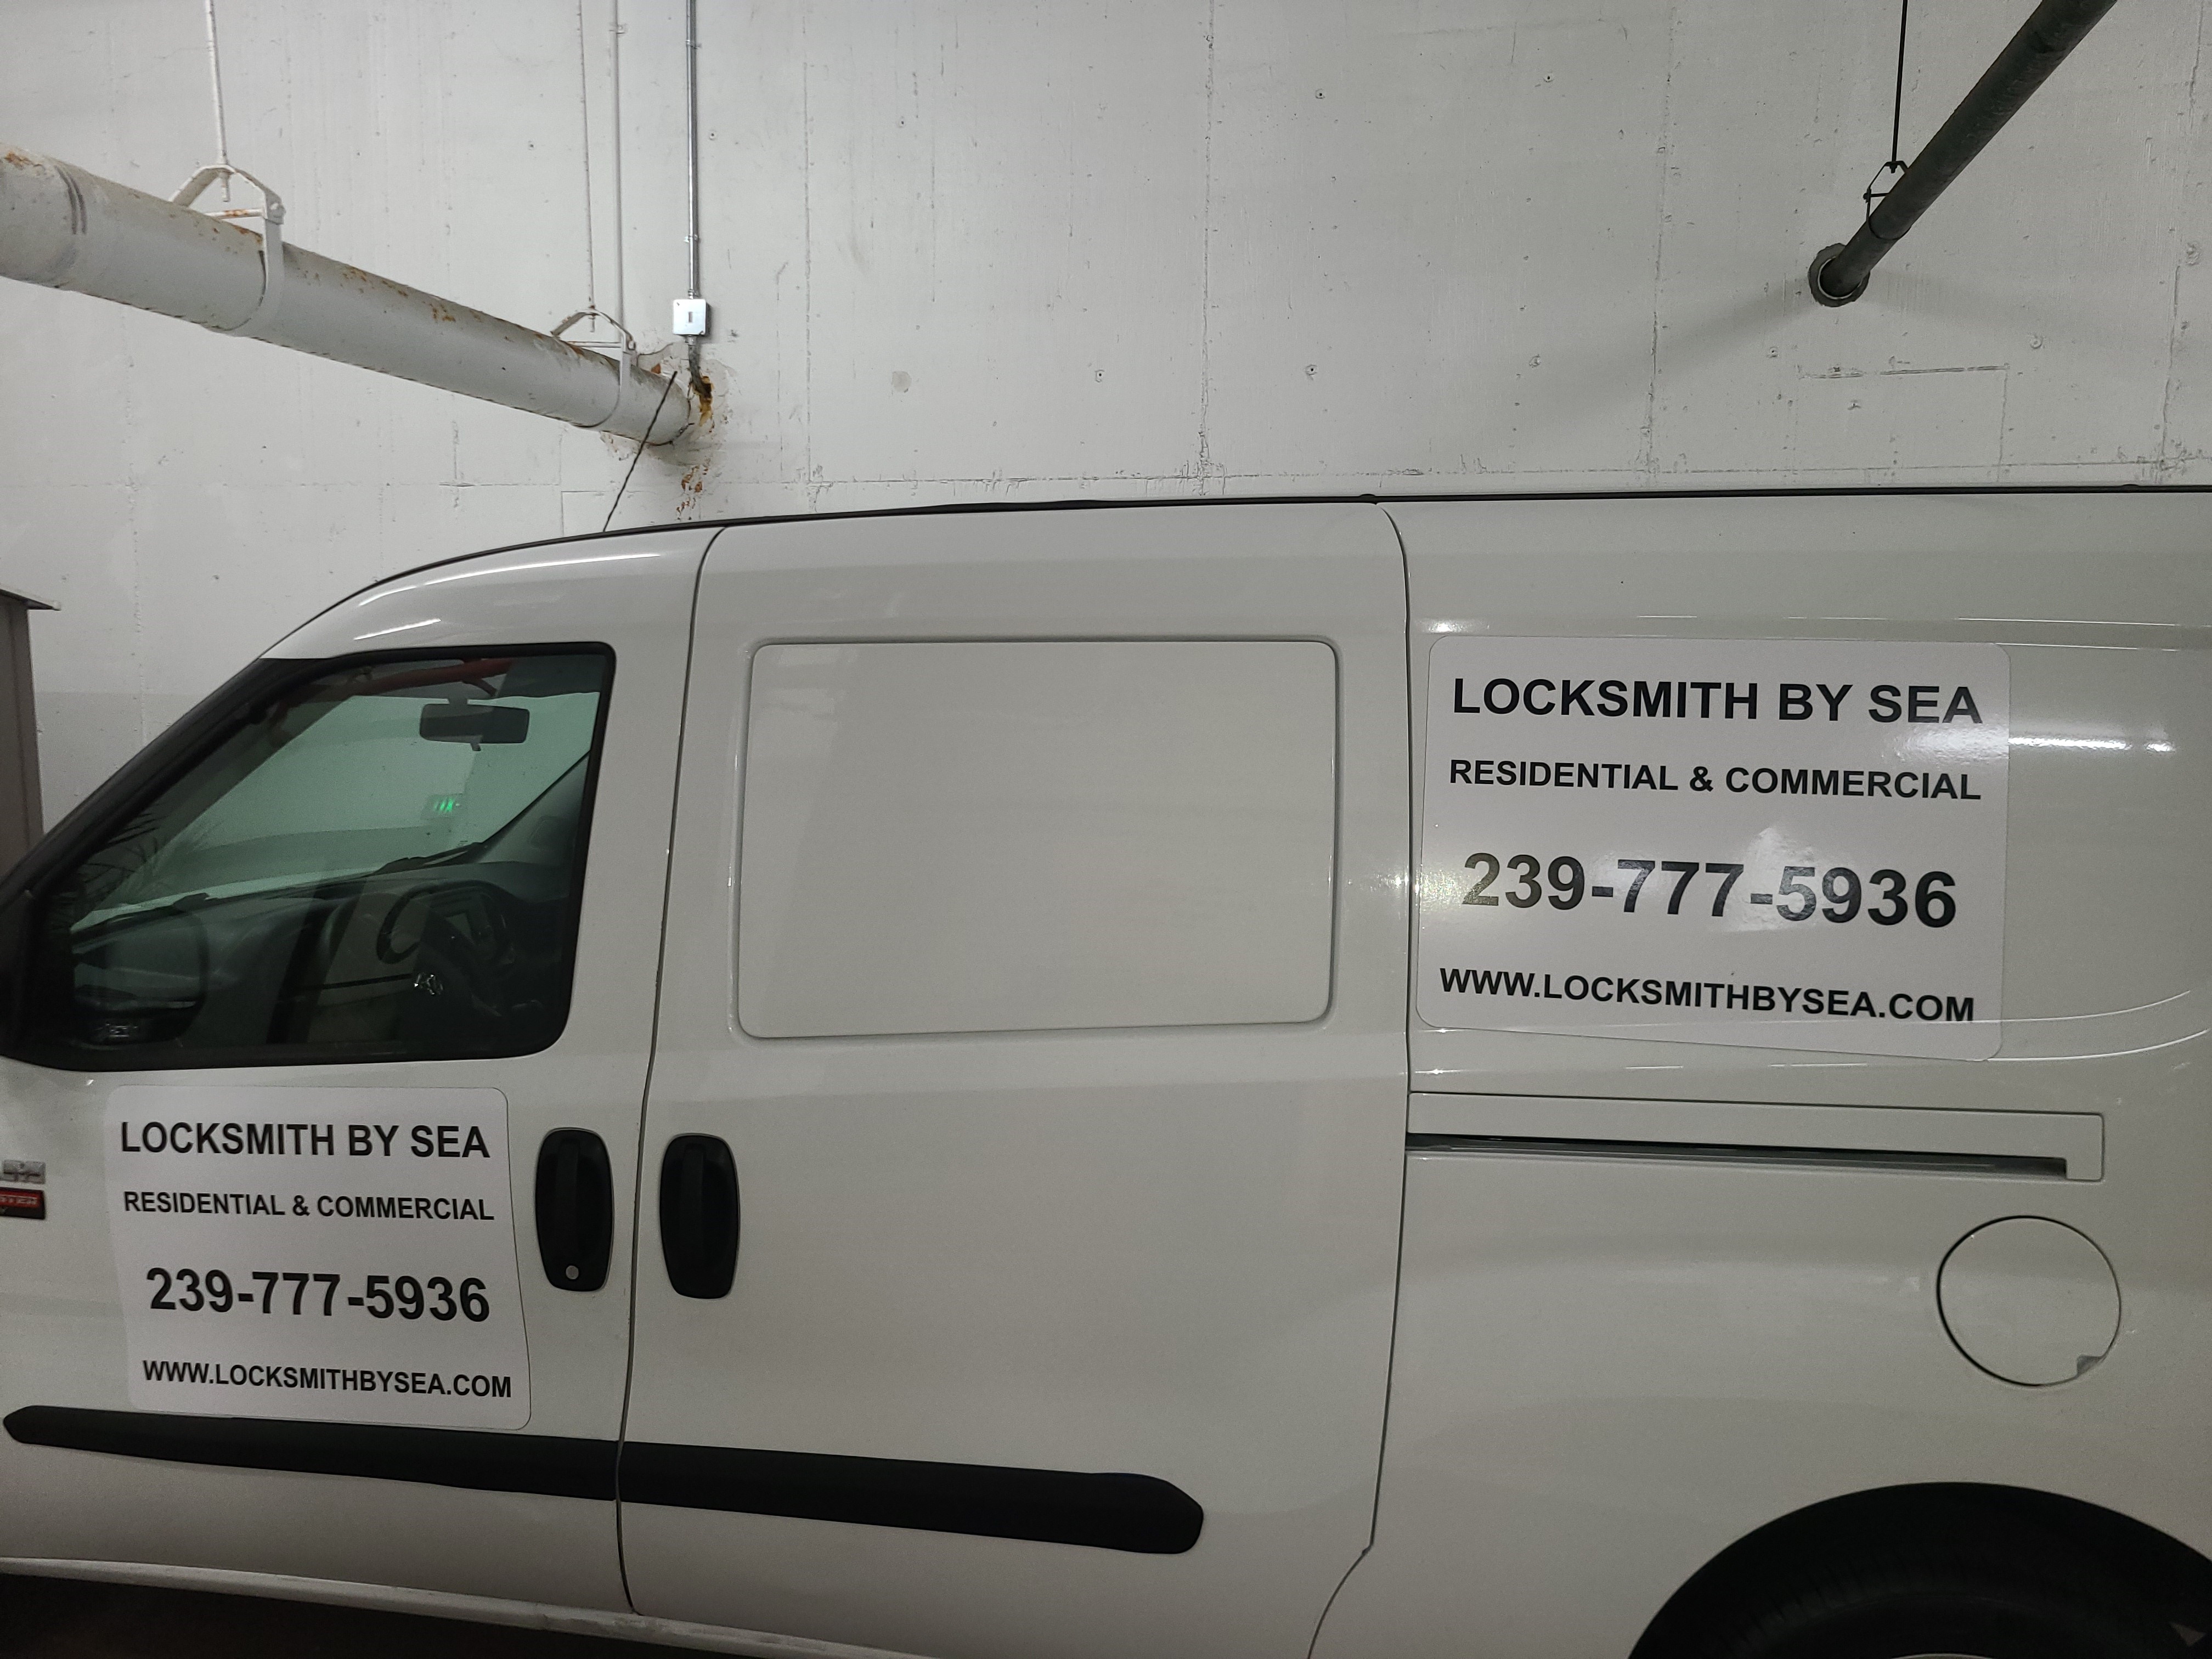 Locksmith By Sea & Handyman Services Logo